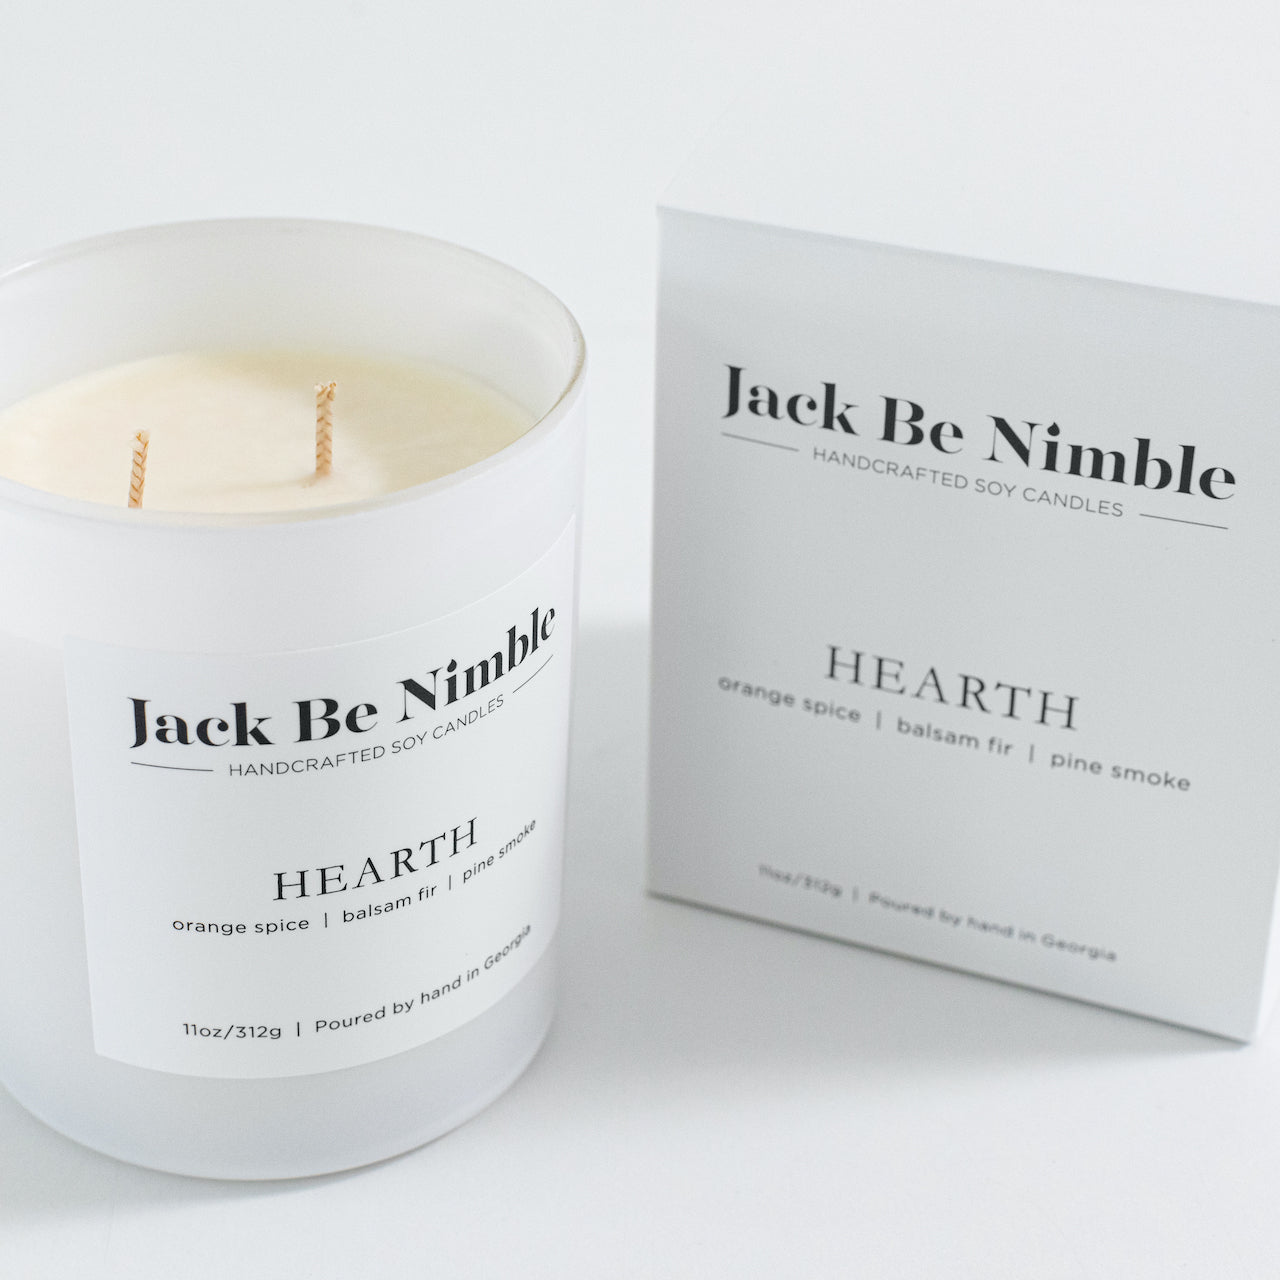 Birthday Candles Romance Heart Shaped Candle – JEM Marketplace INC